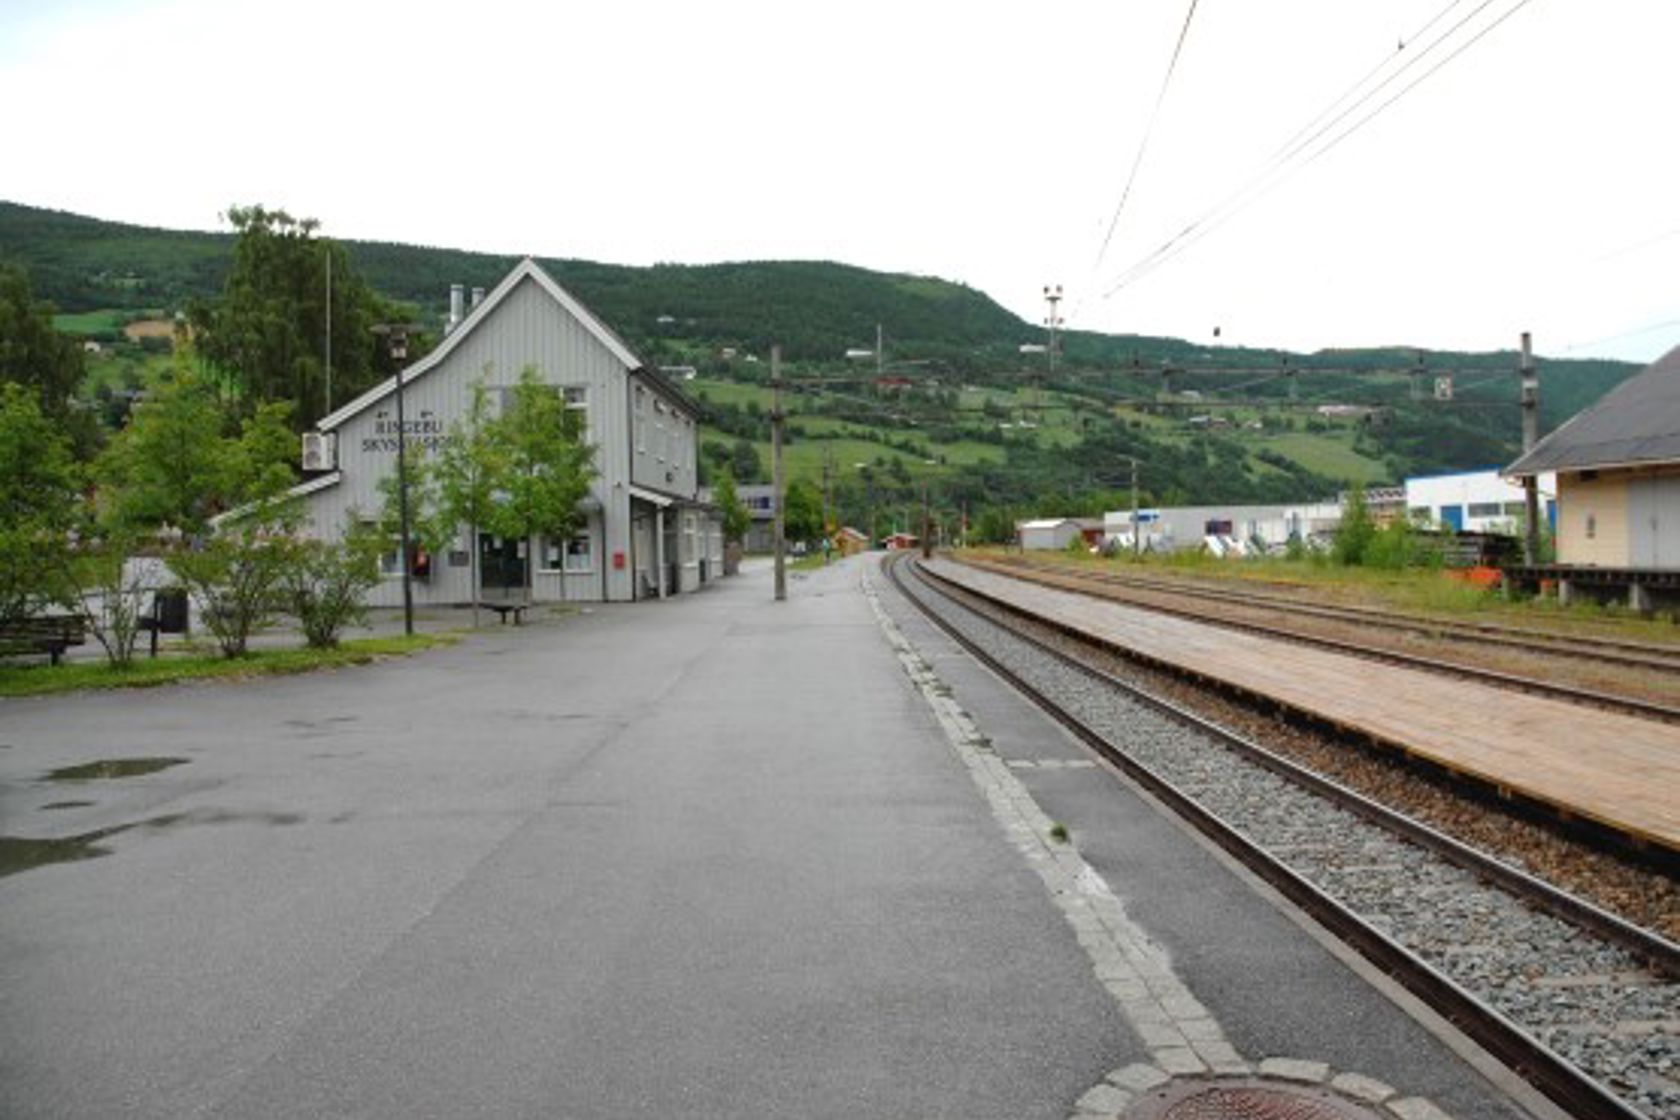 Exterior view of Ringebu station